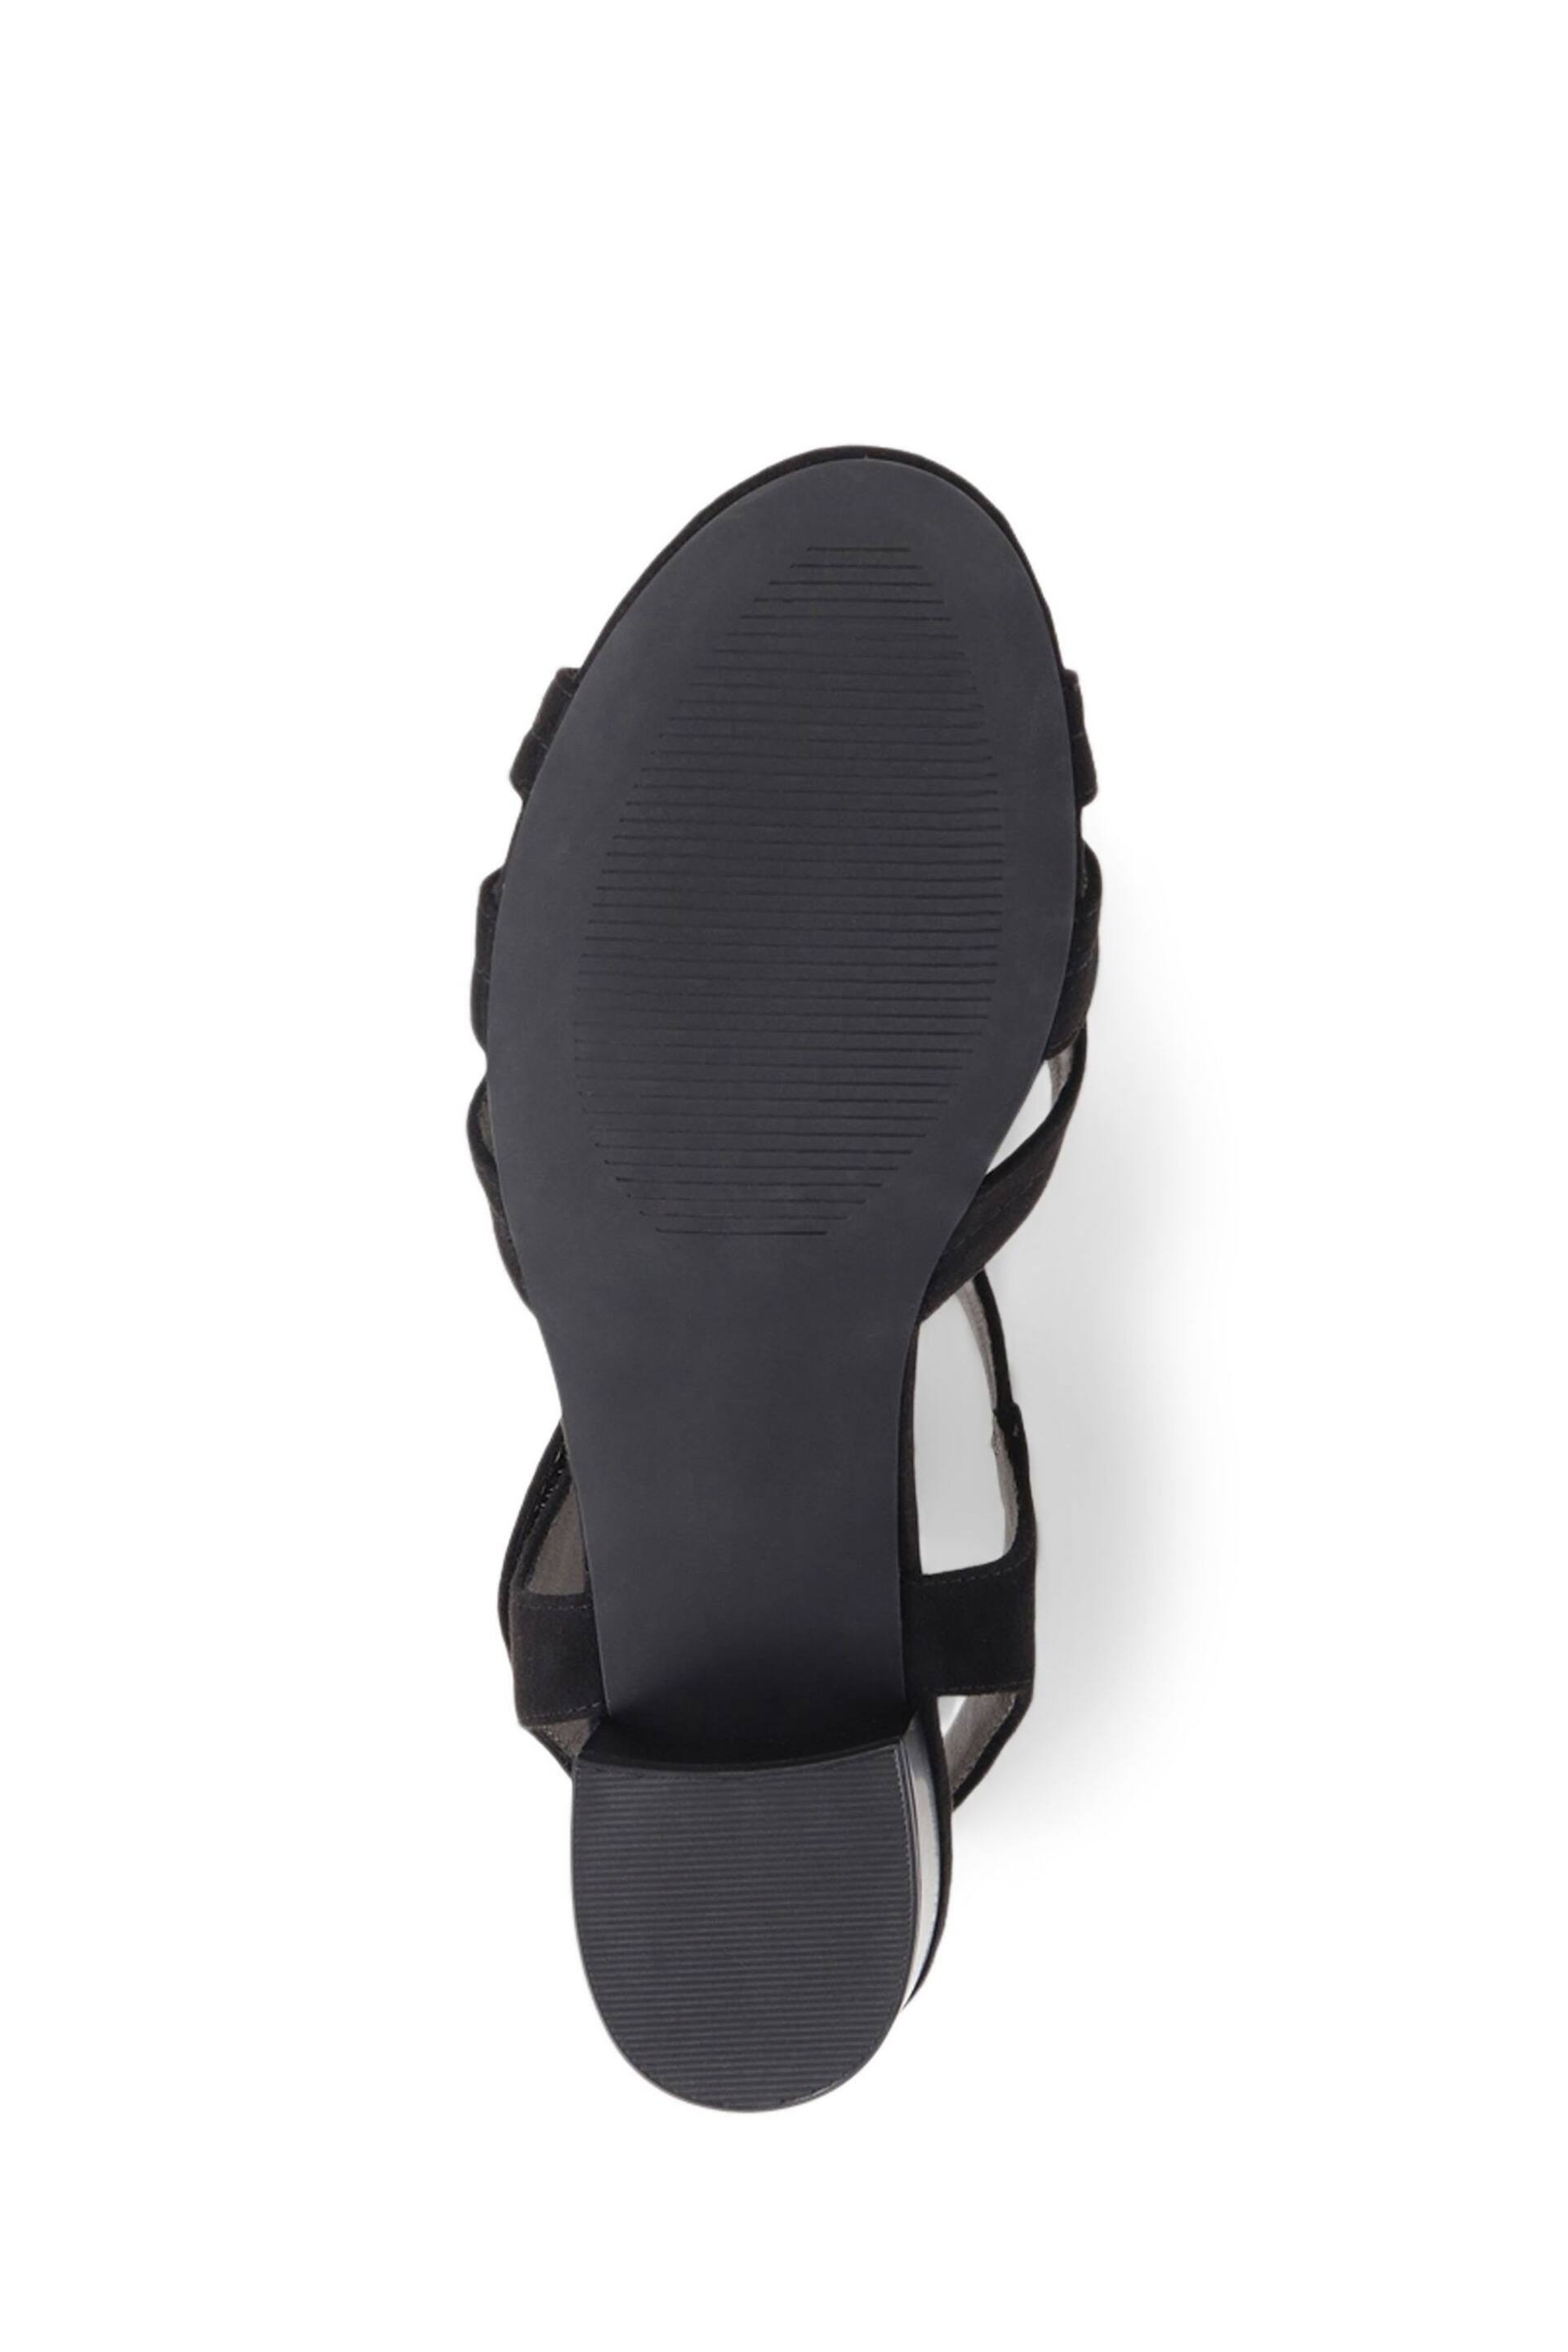 Pavers Heeled Smart Black Sandals - Image 5 of 5